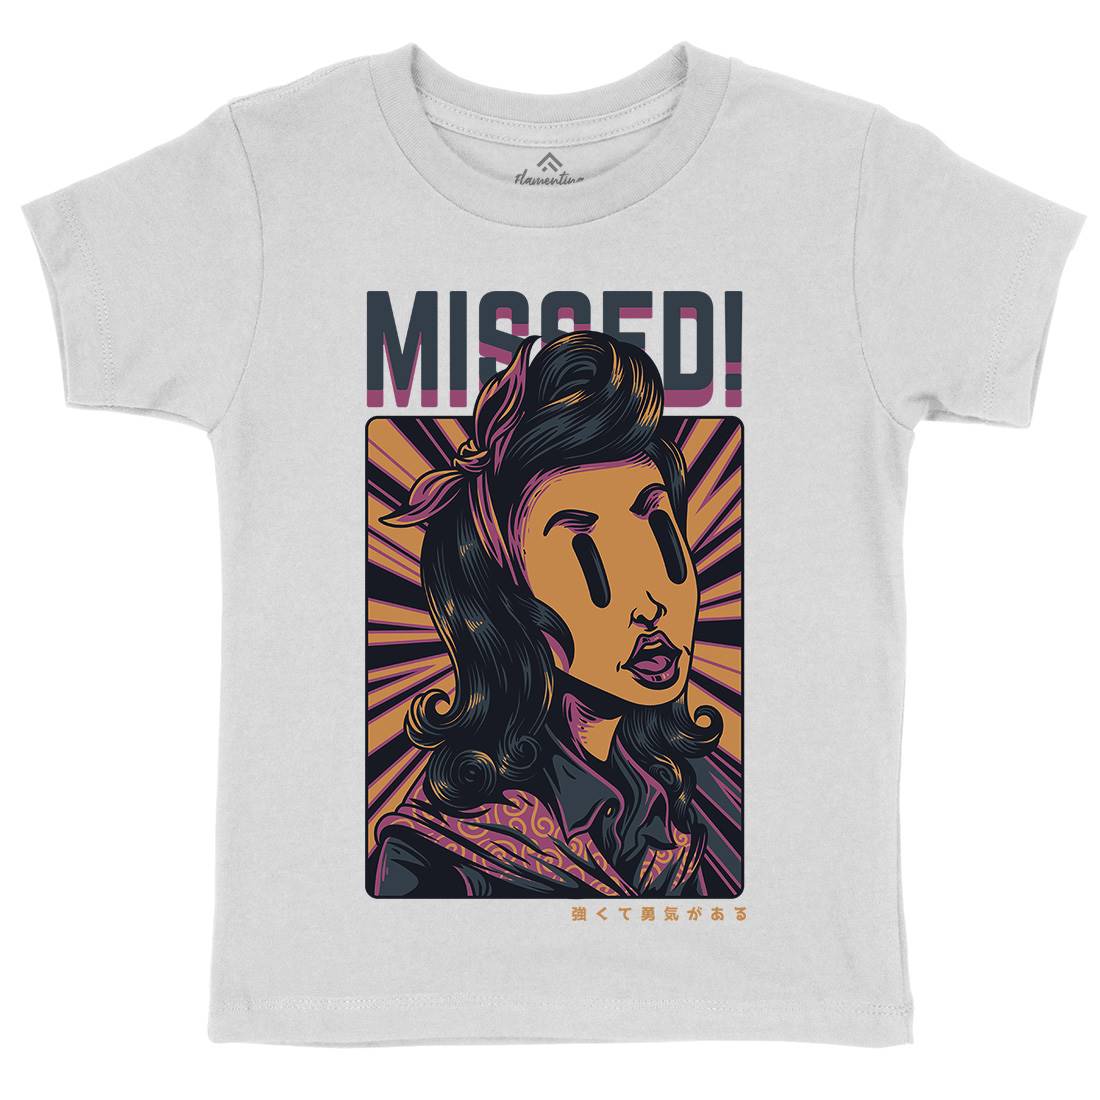 Missed Girl Kids Crew Neck T-Shirt Retro D654